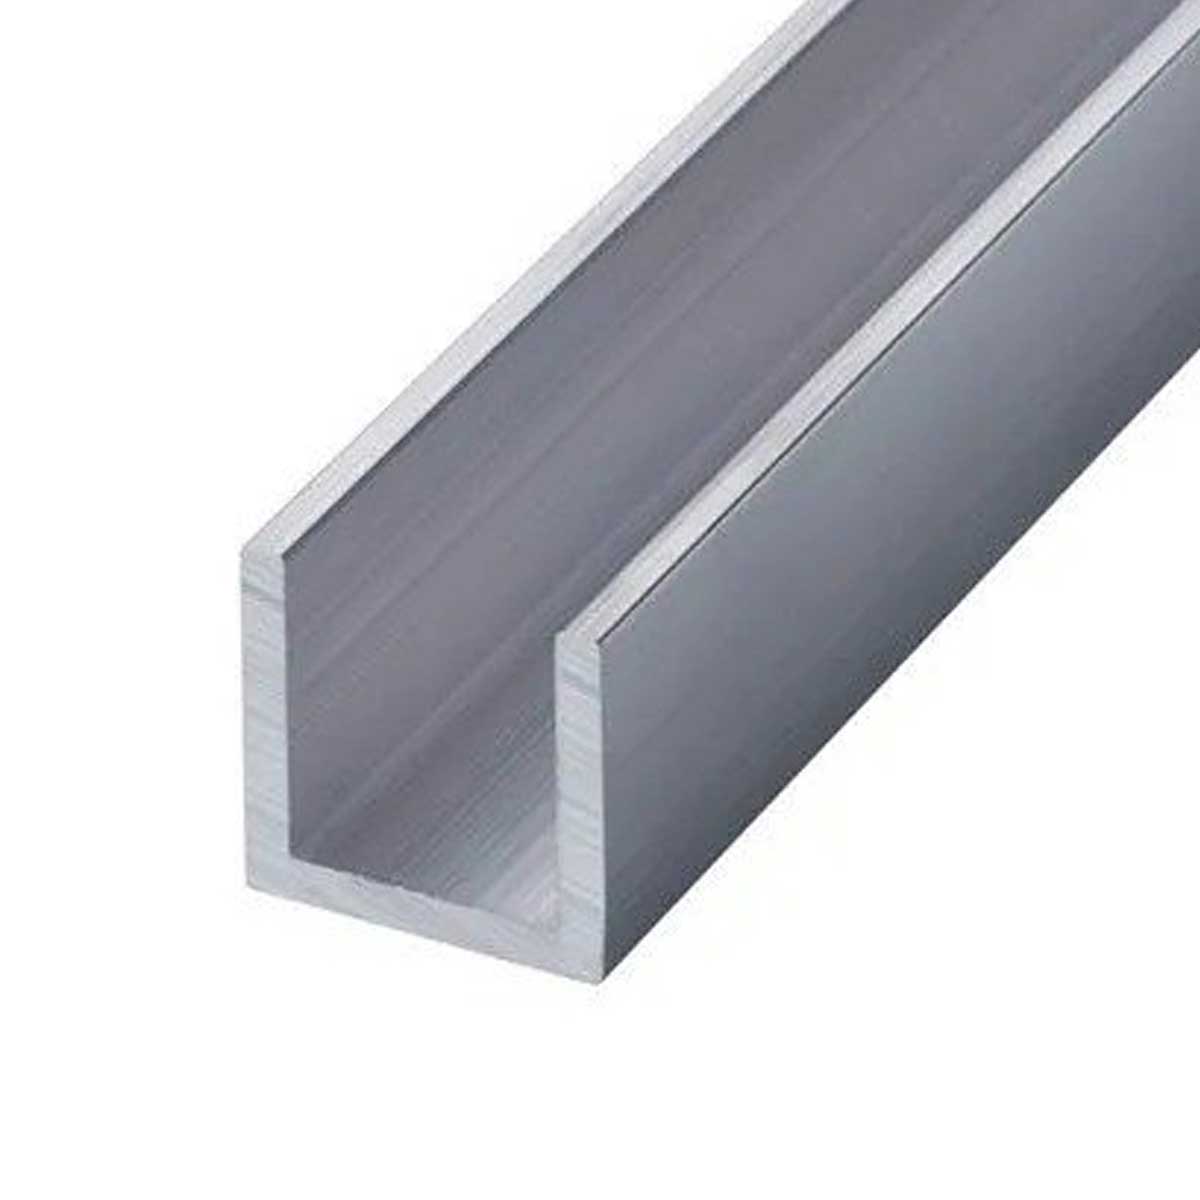 Aluminium C Channel For Construction Manufacturers, Suppliers in Ballari